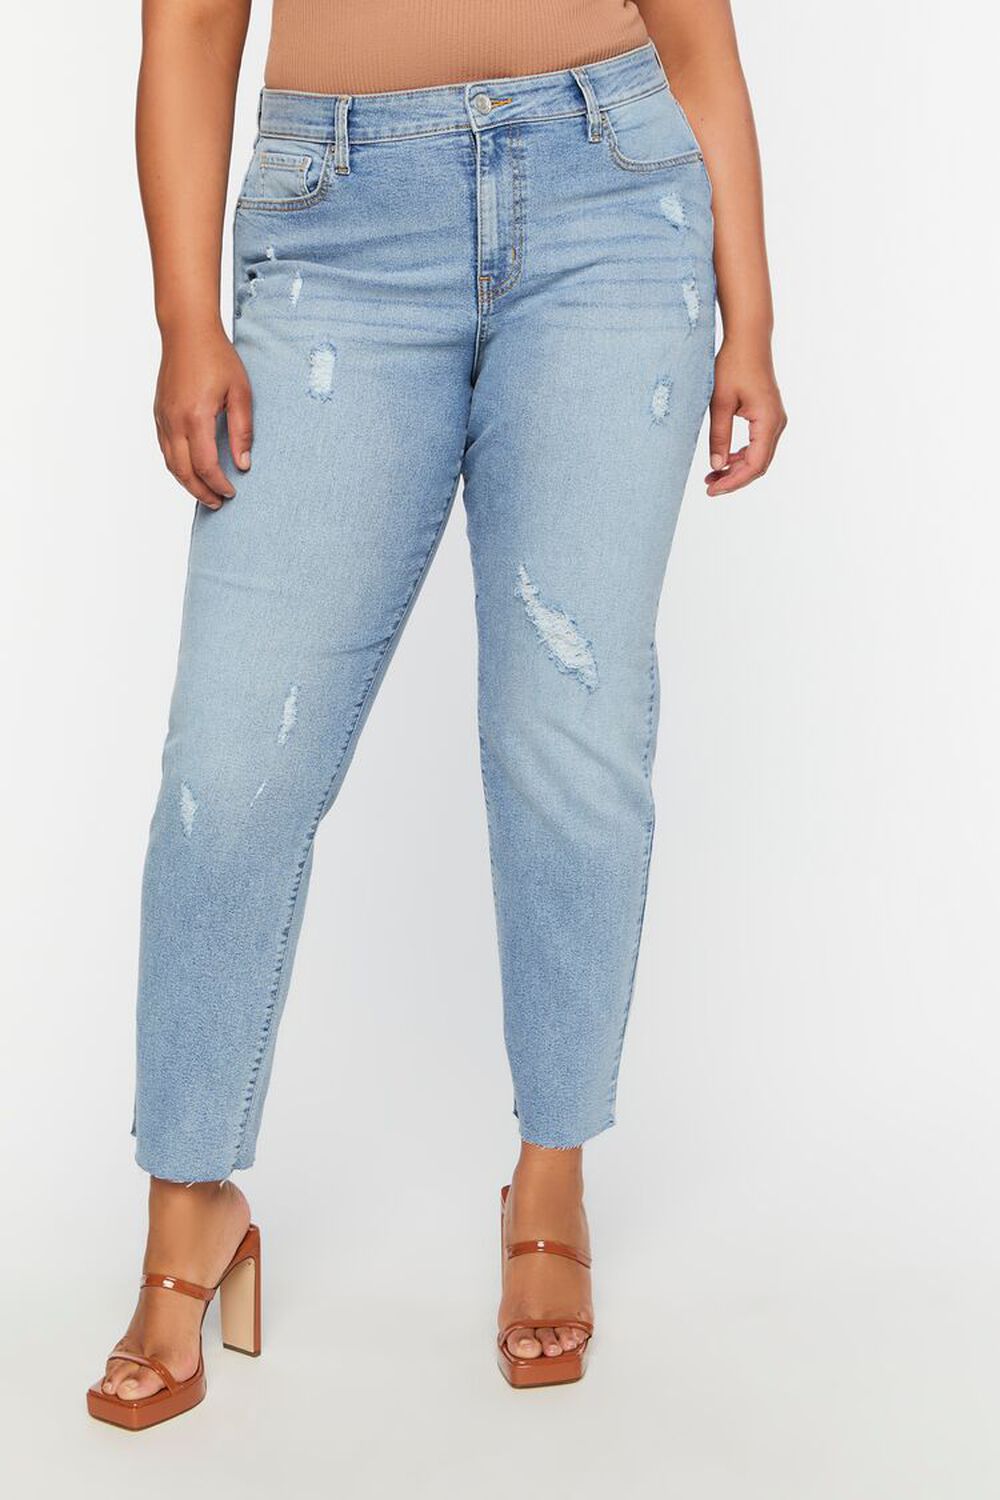 MEDIUM DENIM Plus Size Distressed Boyfriend Jeans, image 1